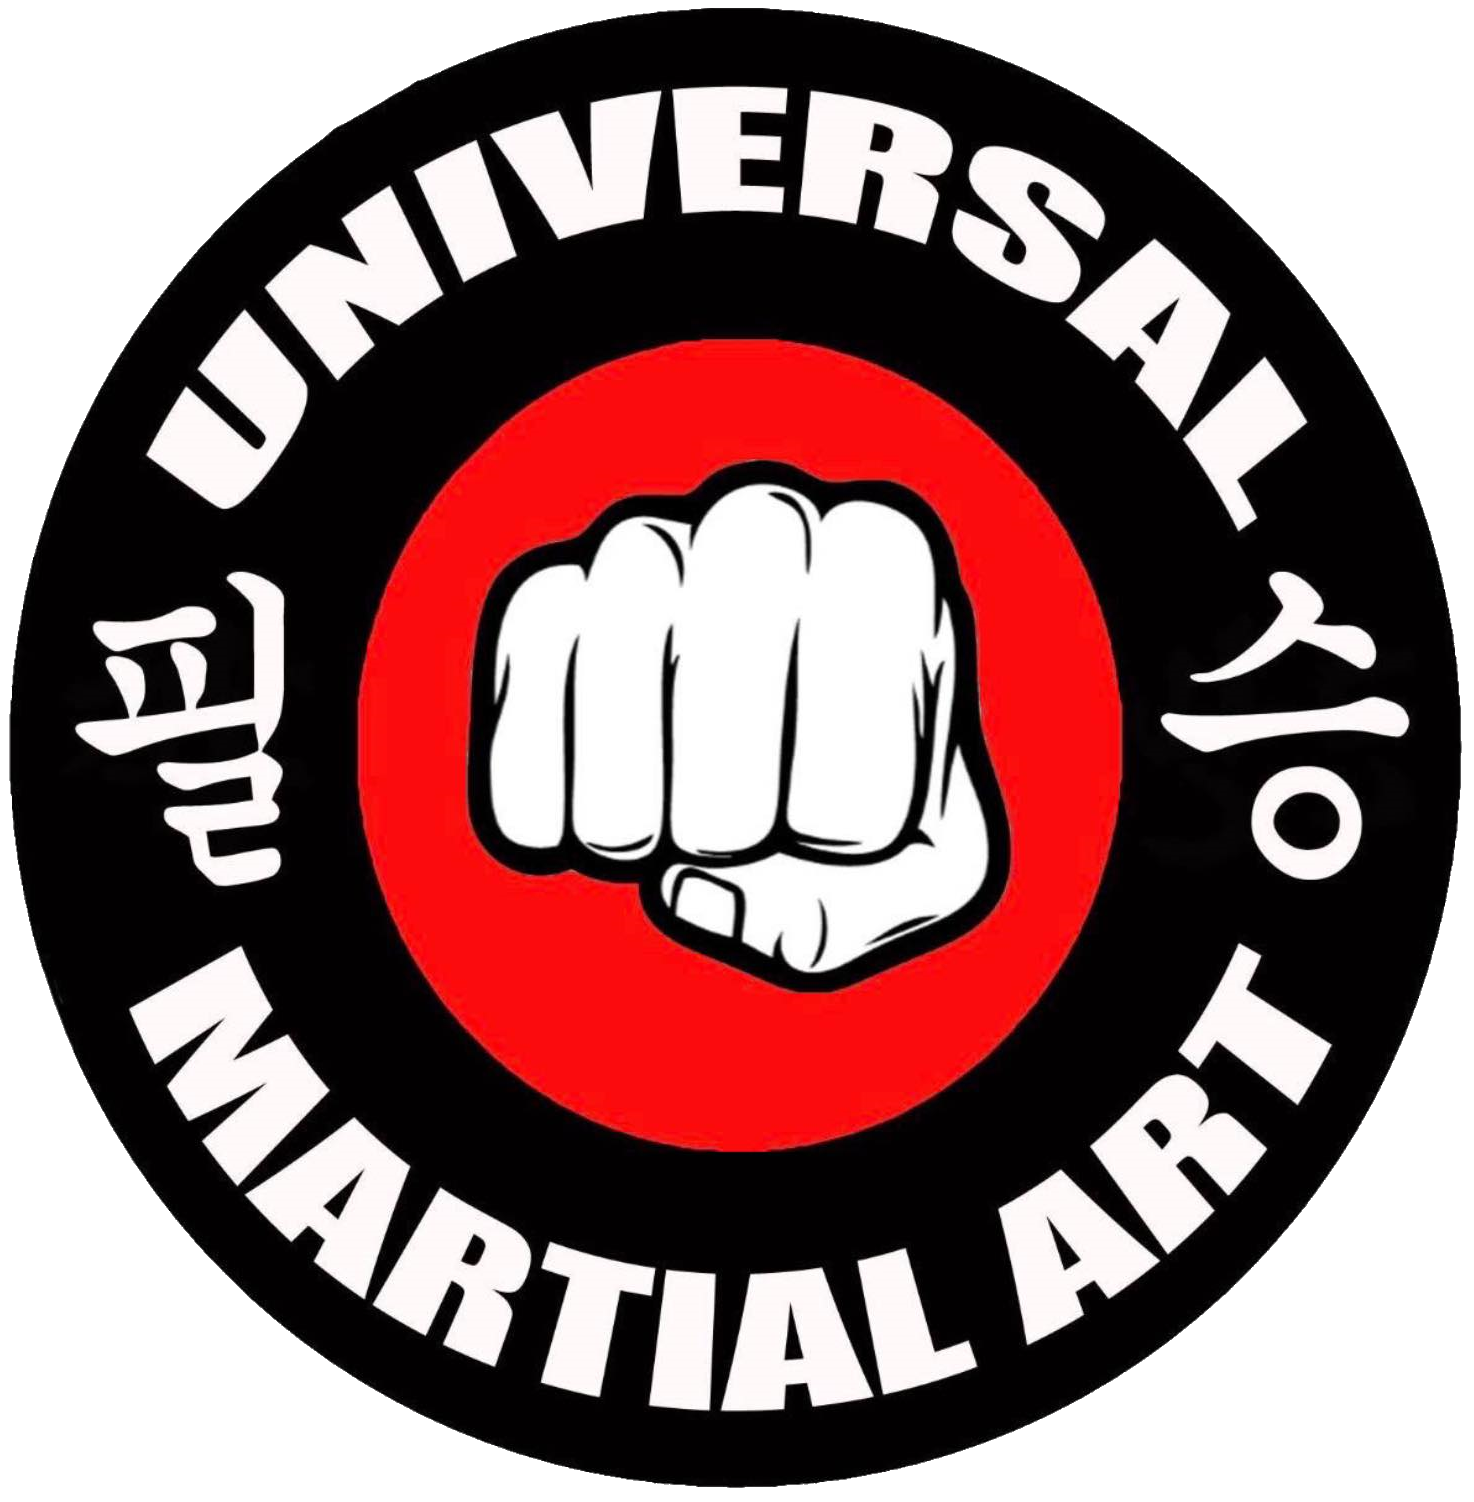 Universal Martial Arts Academy